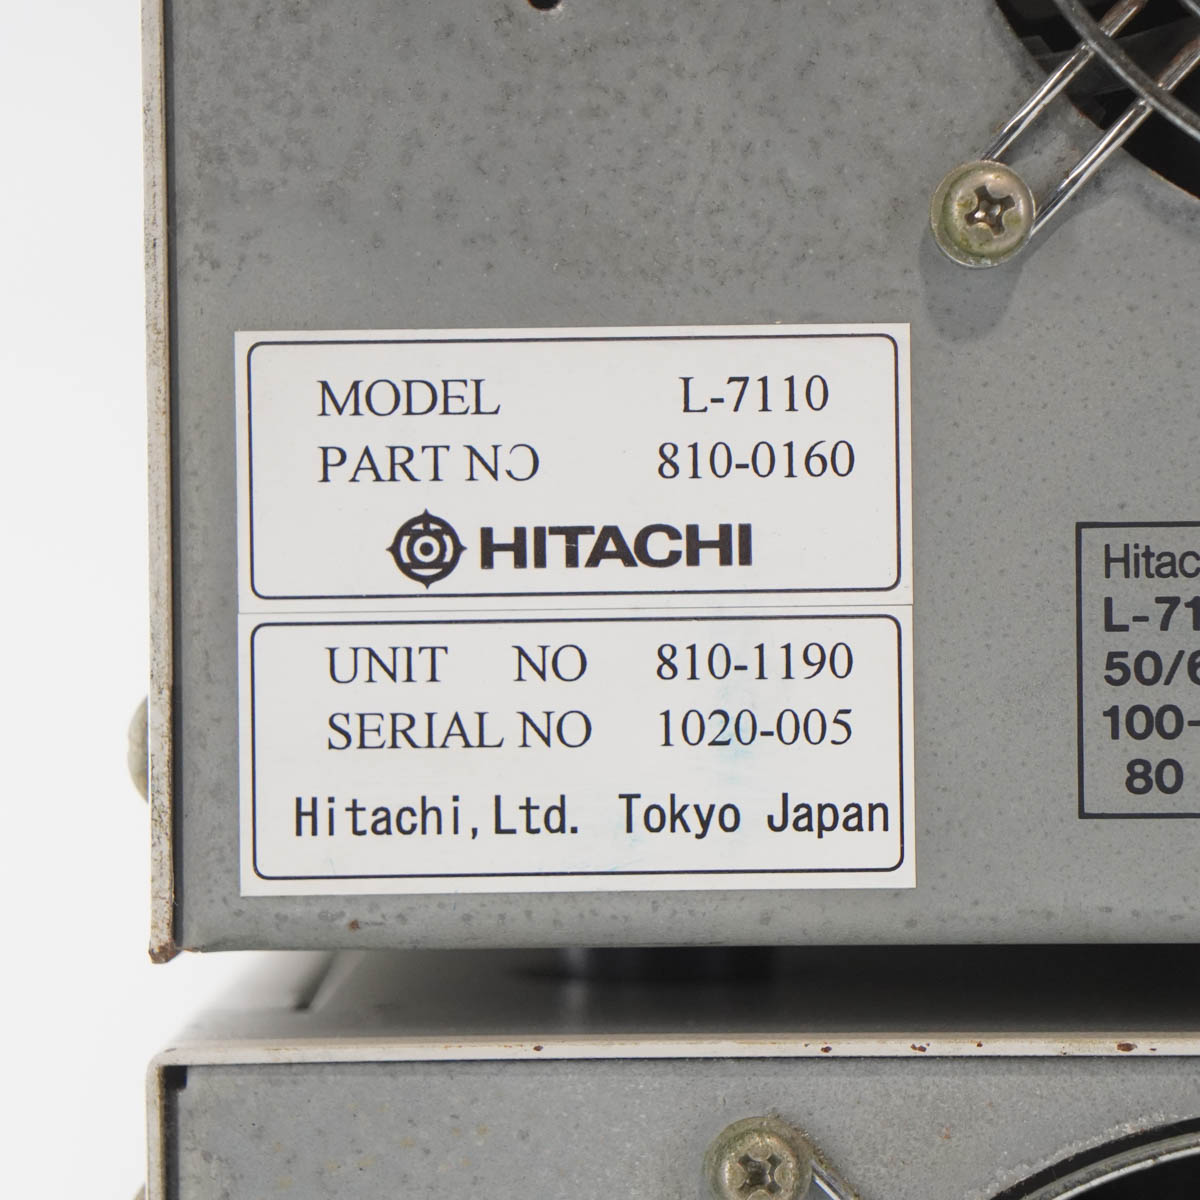 DW]USED 8日保証 セット HITACHI L-7110 L-7400 L-7300 L-7200 D-7500 LaChrom HPLC  液クロ Pump UV Detector Column Ov...[ST03851-0001] 分析機器,液体クロマトグラフ  中古販売分析機器計測器総合商社ディルウィングス